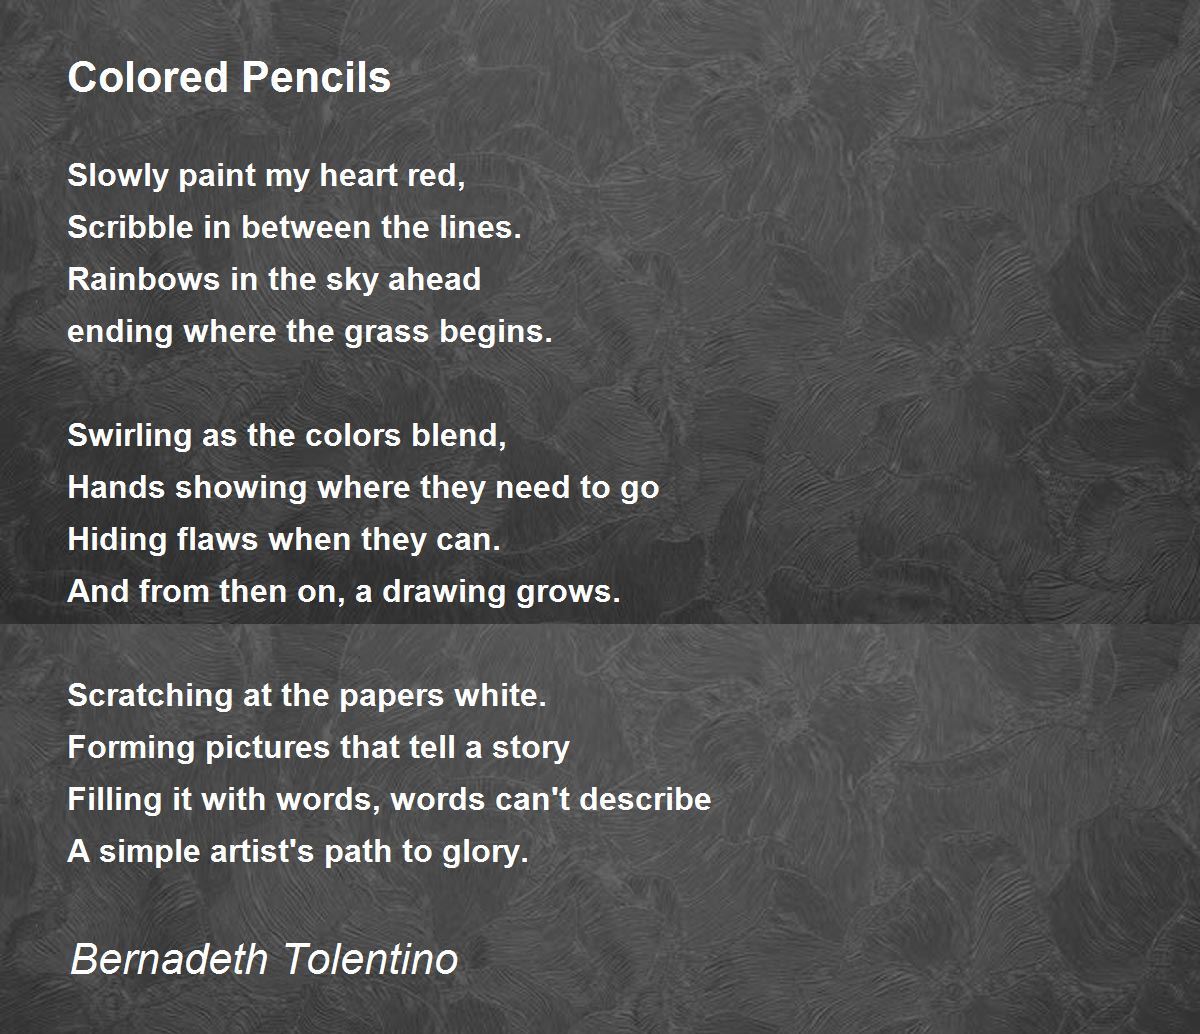 Colored Pencils By Bernadeth Tolentino Colored Pencils Poem